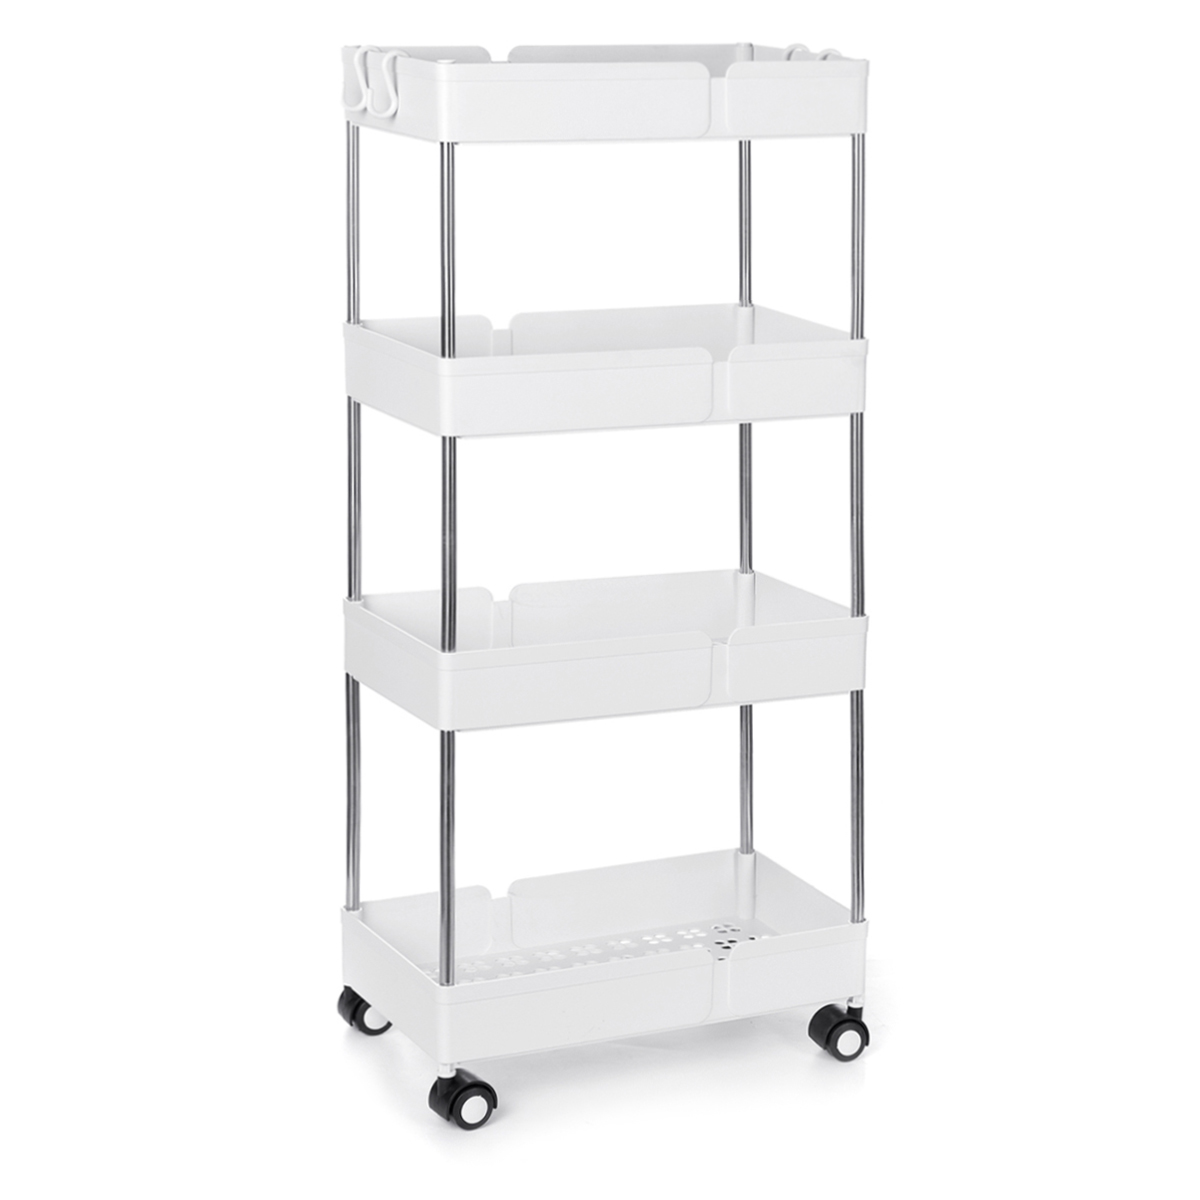 234-Rolling-Trolley-Storage-Holder-Rack-Organiser-With-Wheels-For-Kitchen-Bathroom-Office-1827511-14